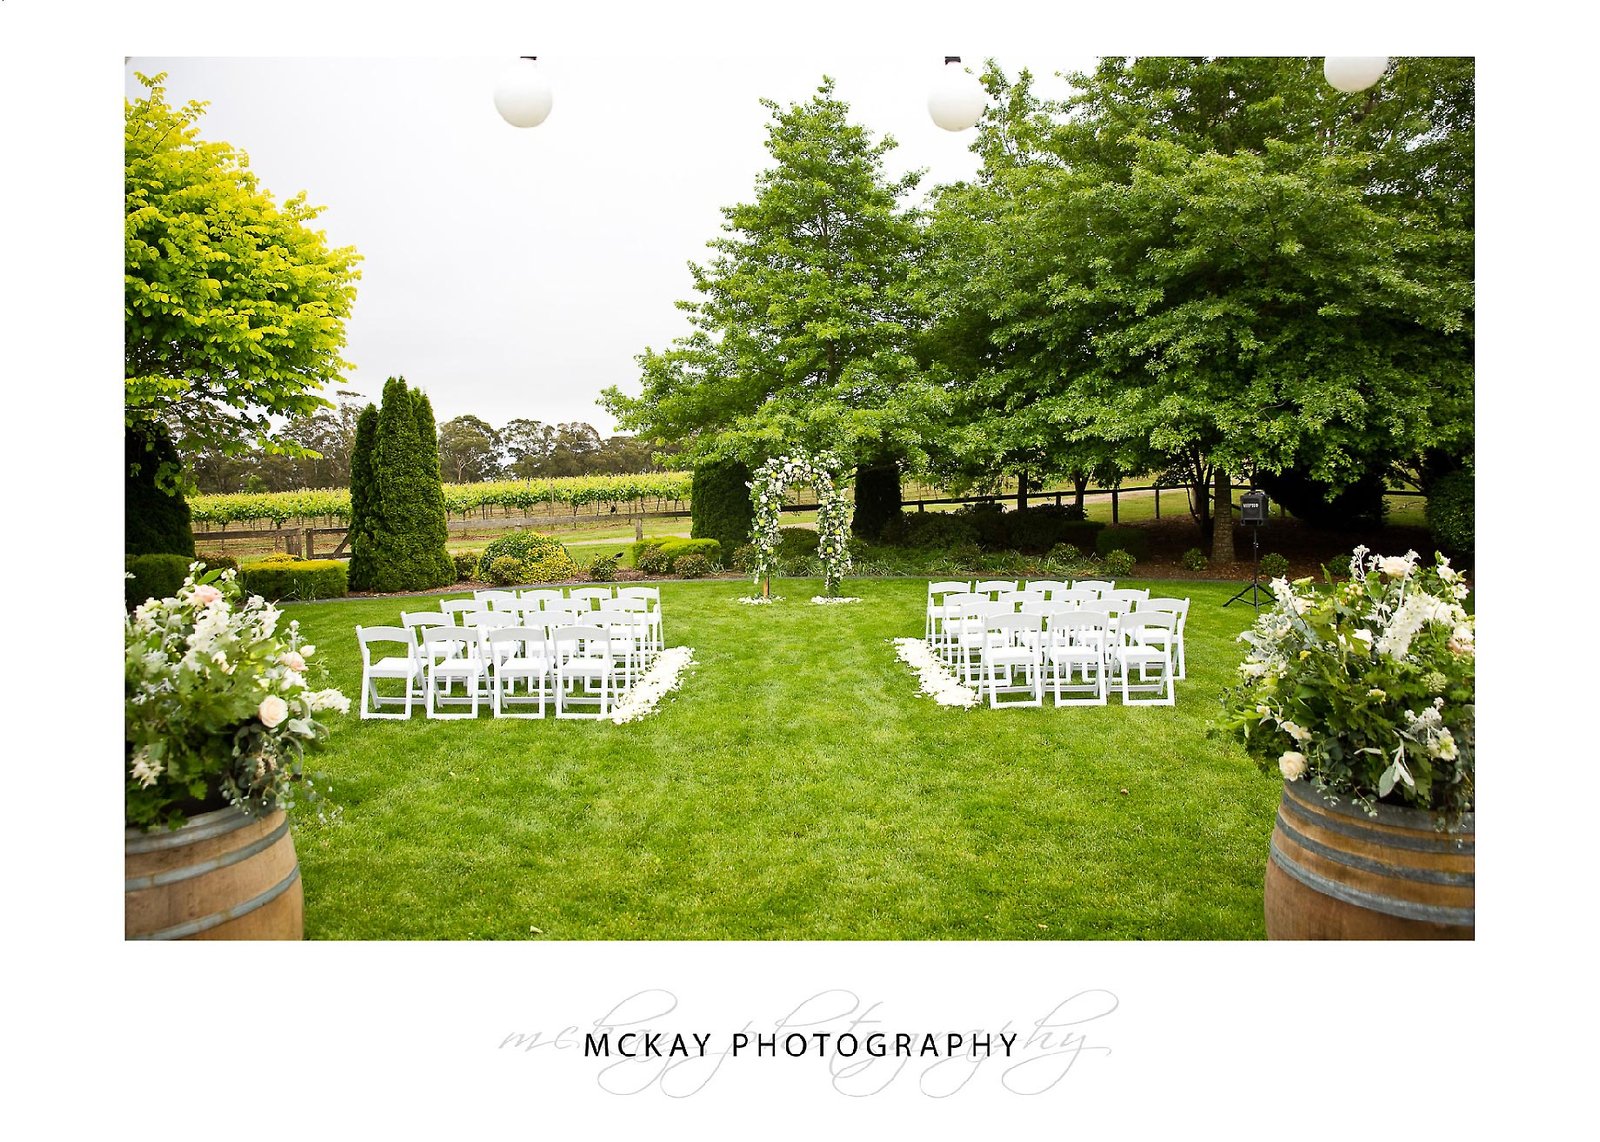 Centennial Vineyards wedding ceremony set up on lawn